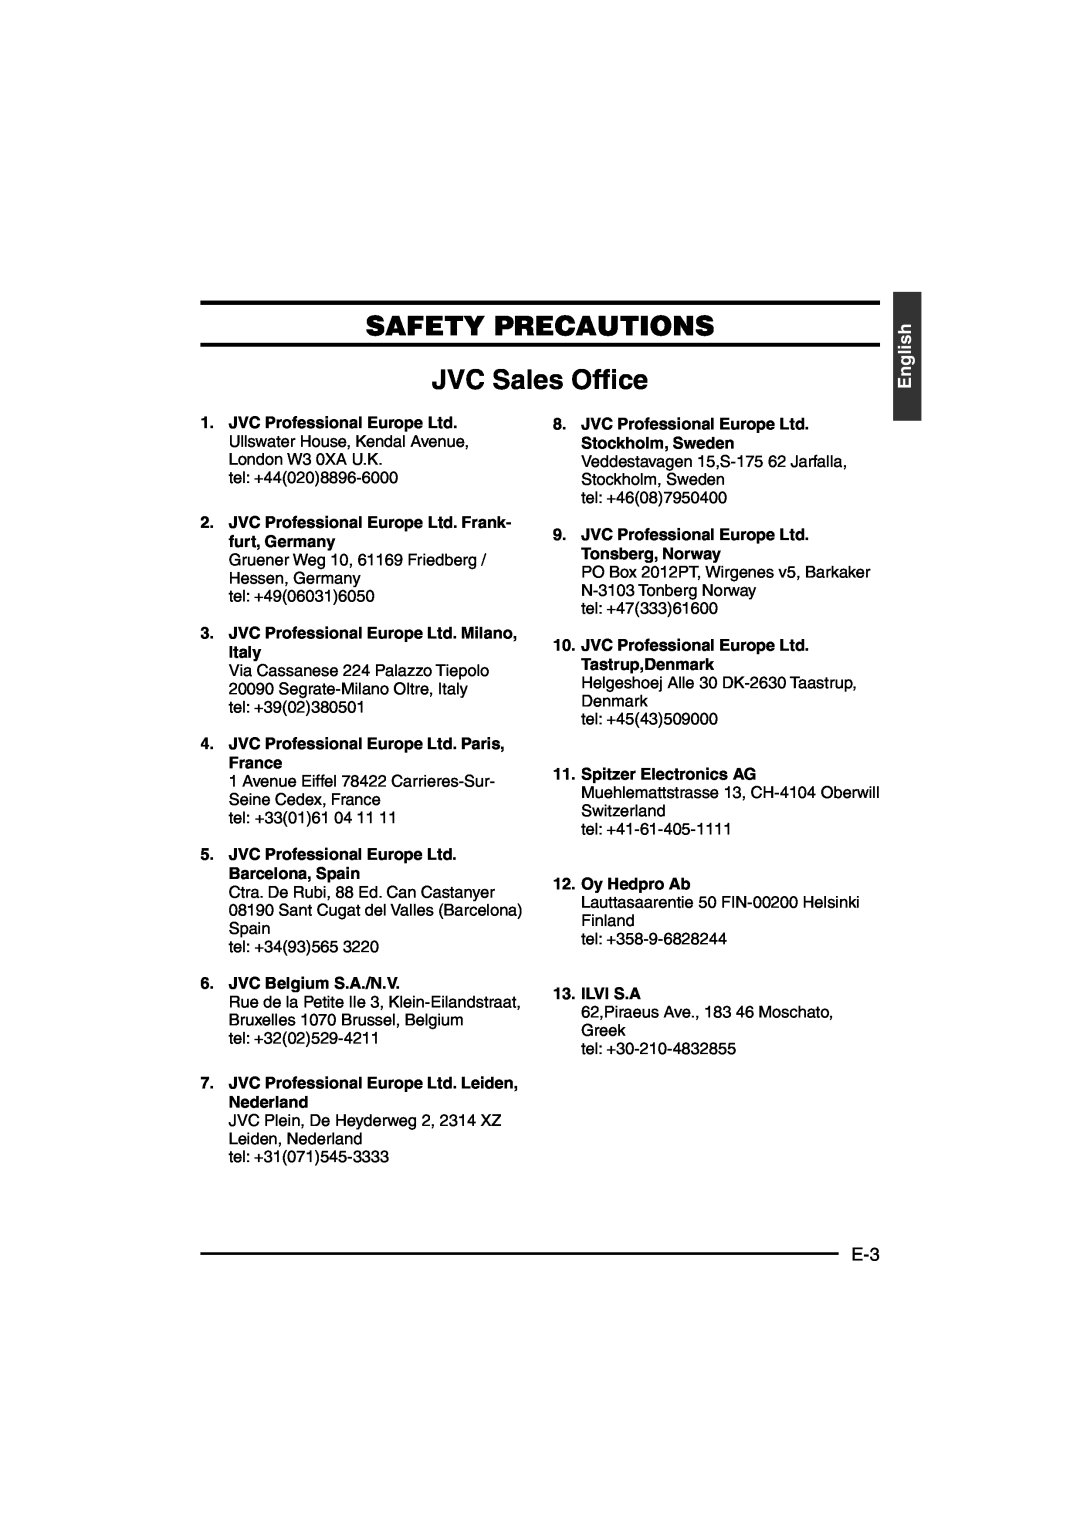 JVC KY-F550E instruction manual SAFETY PRECAUTIONS JVC Sales Office, English, JVC Belgium S.A./N.V, Oy Hedpro Ab, Ilvi S.A 